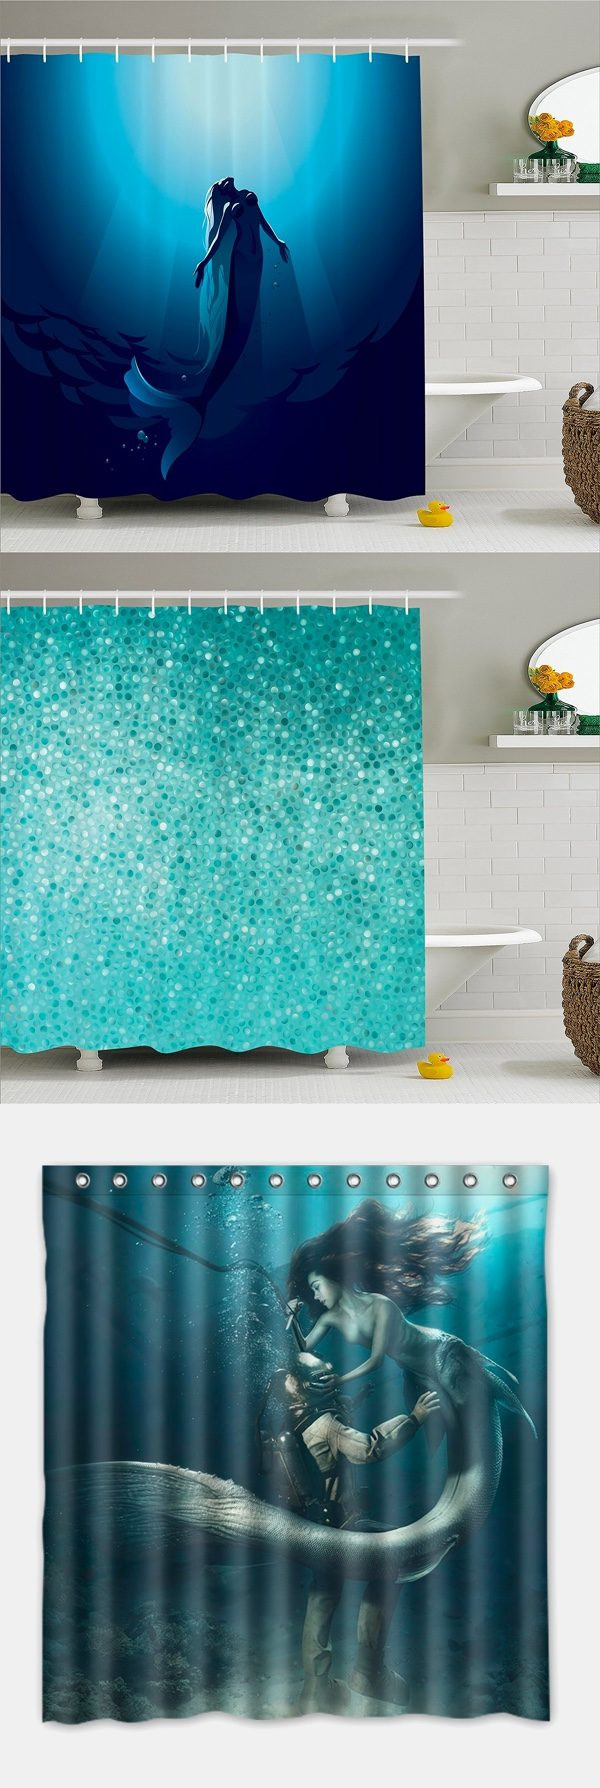 Mermaid Bathroom Decor
 52 Beautiful Mermaid Decor Accessories To Bring The Ocean Home